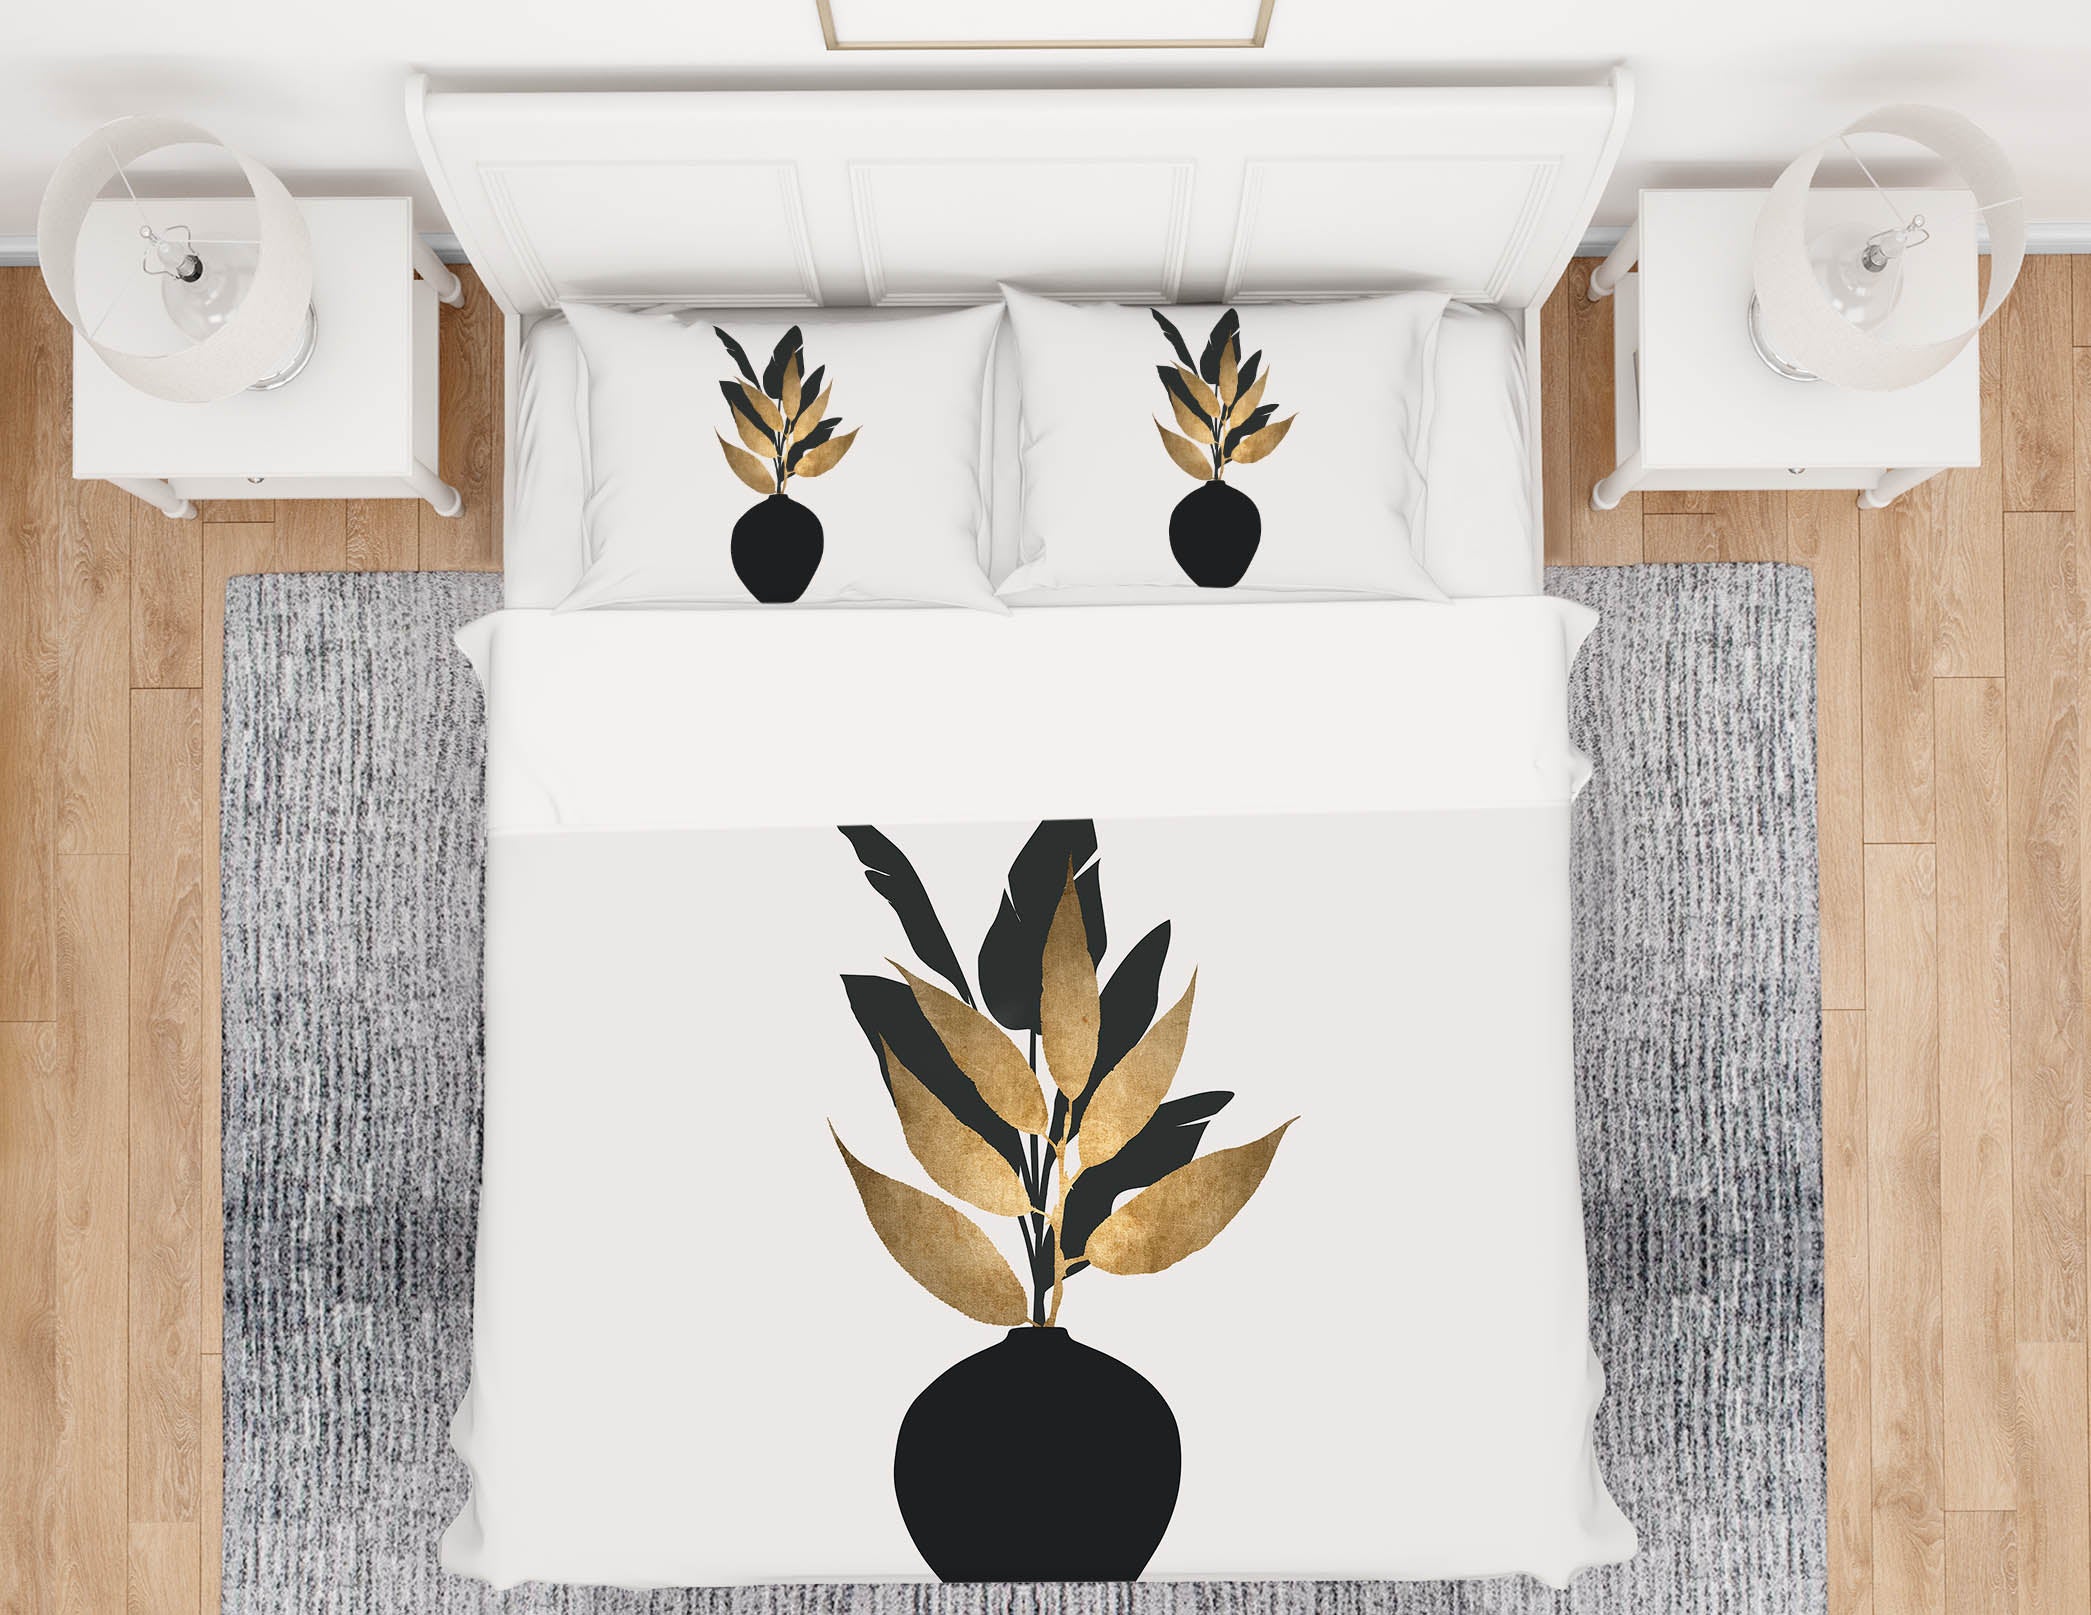 3D Black Vase 119 Boris Draschoff Bedding Bed Pillowcases Quilt